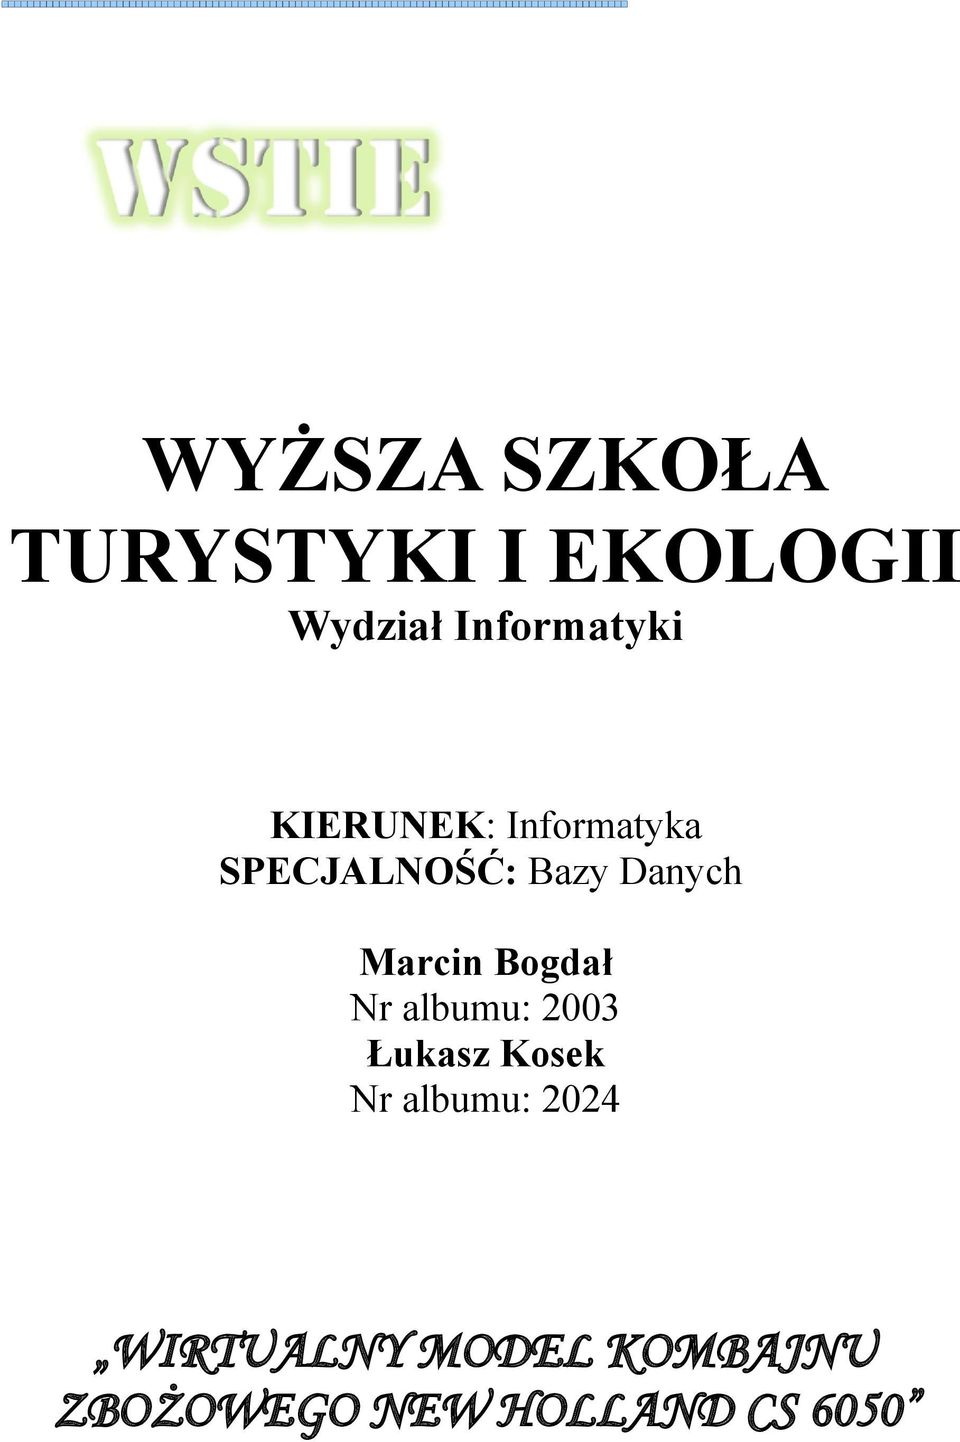 Danych Marcin Bogdał Nr albumu: 2003 Łukasz Kosek Nr